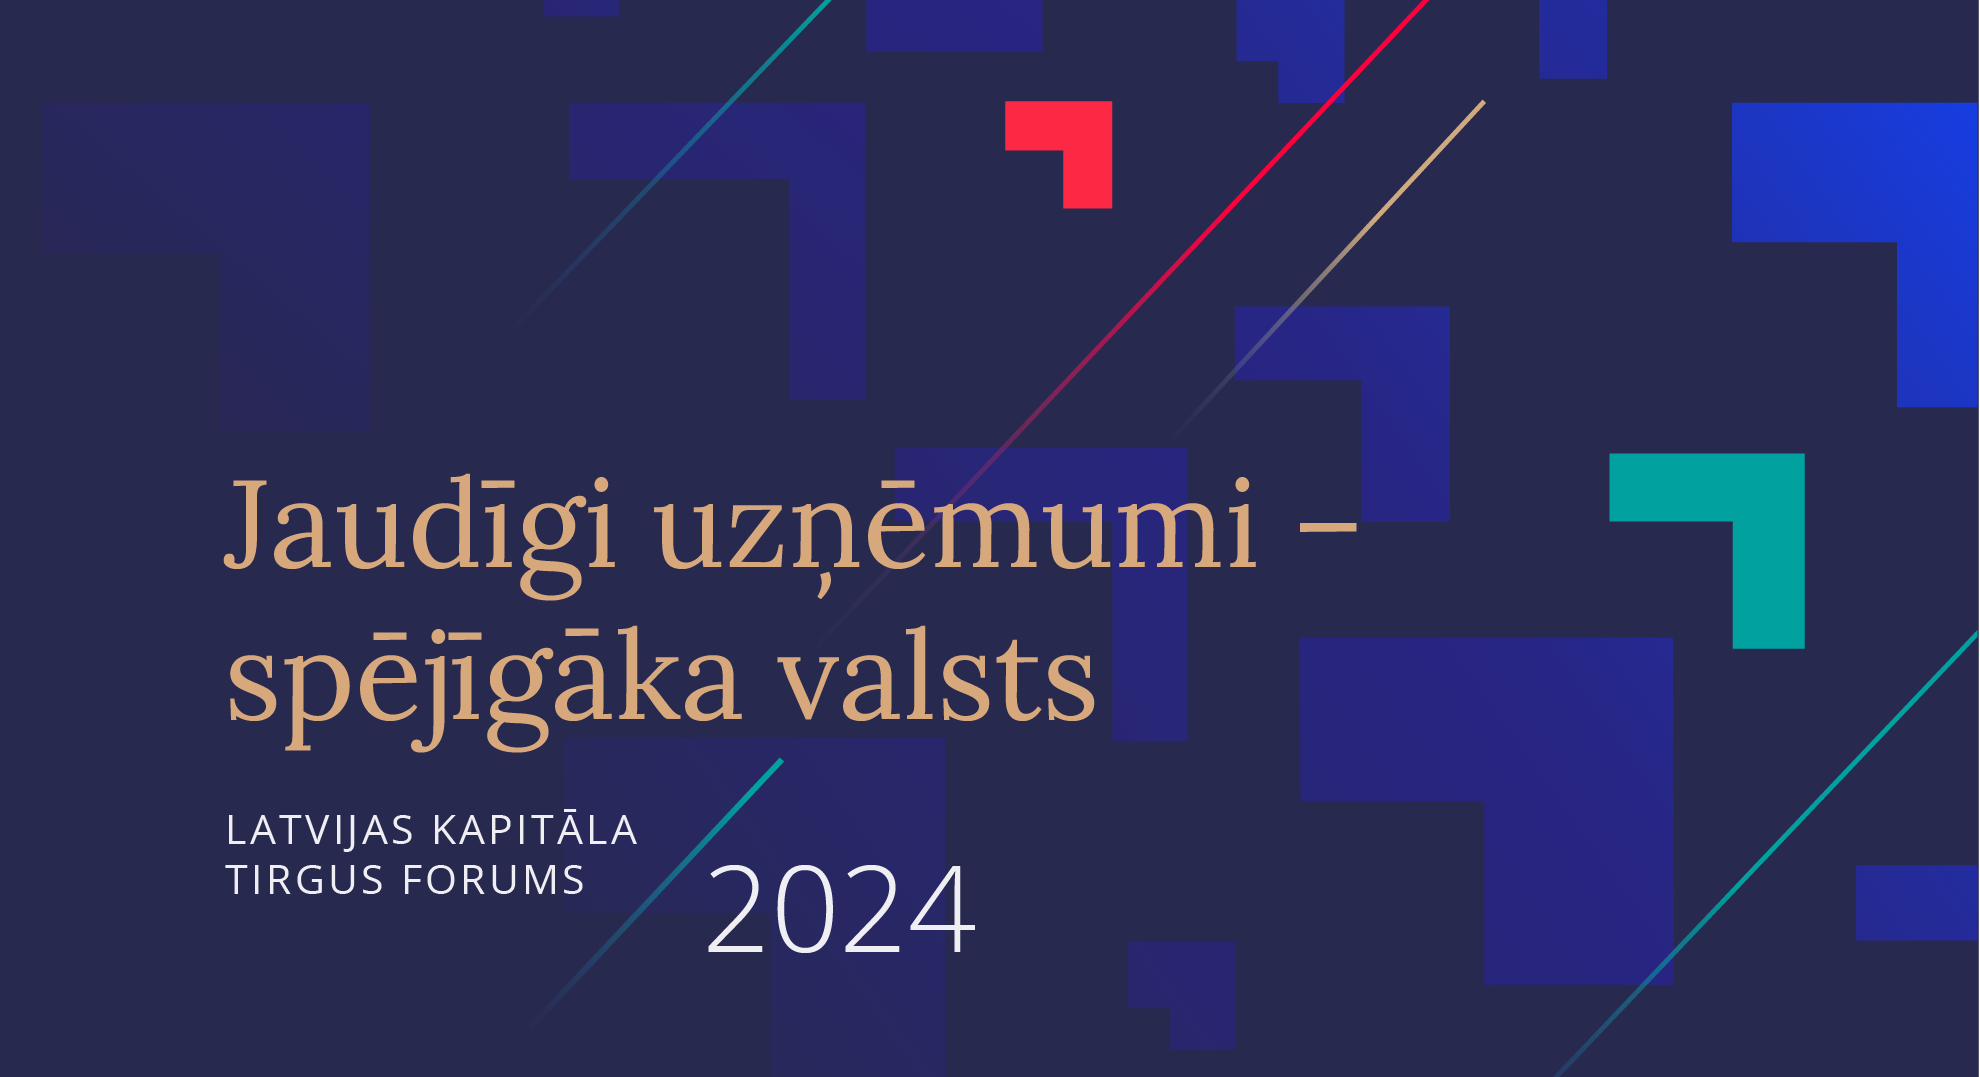 latvijas kapitala tirgus forums 02